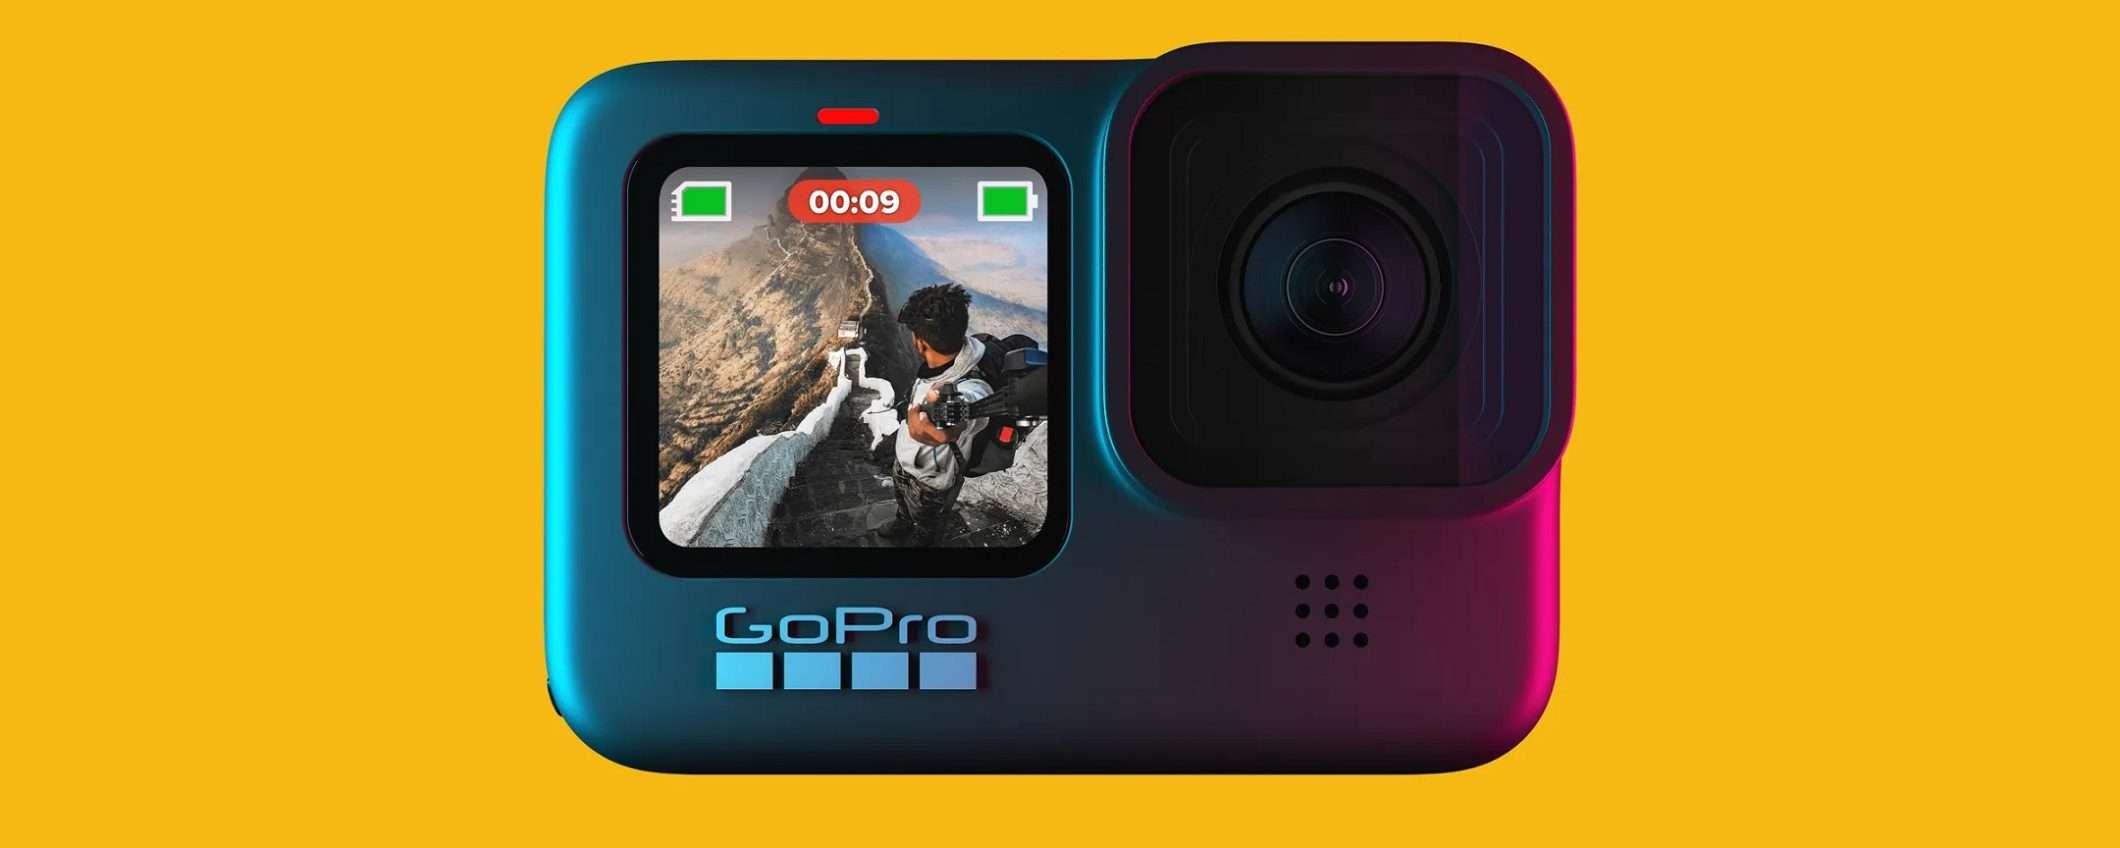 Acquista GoPro HERO9 su Amazon al 42% in meno: action cam IMPERDIBILE